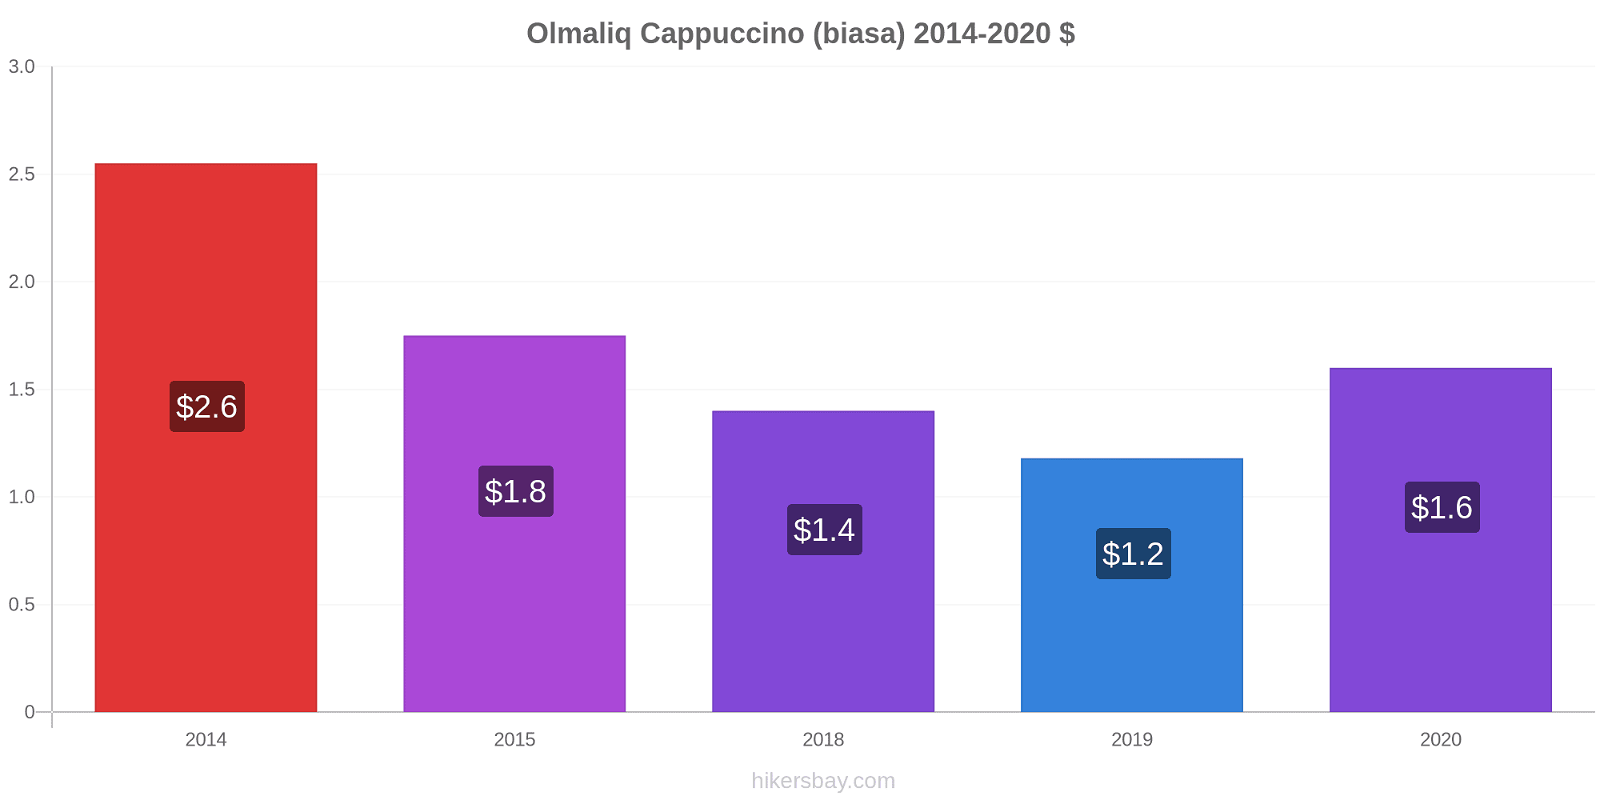 Olmaliq perubahan harga Cappuccino (biasa) hikersbay.com